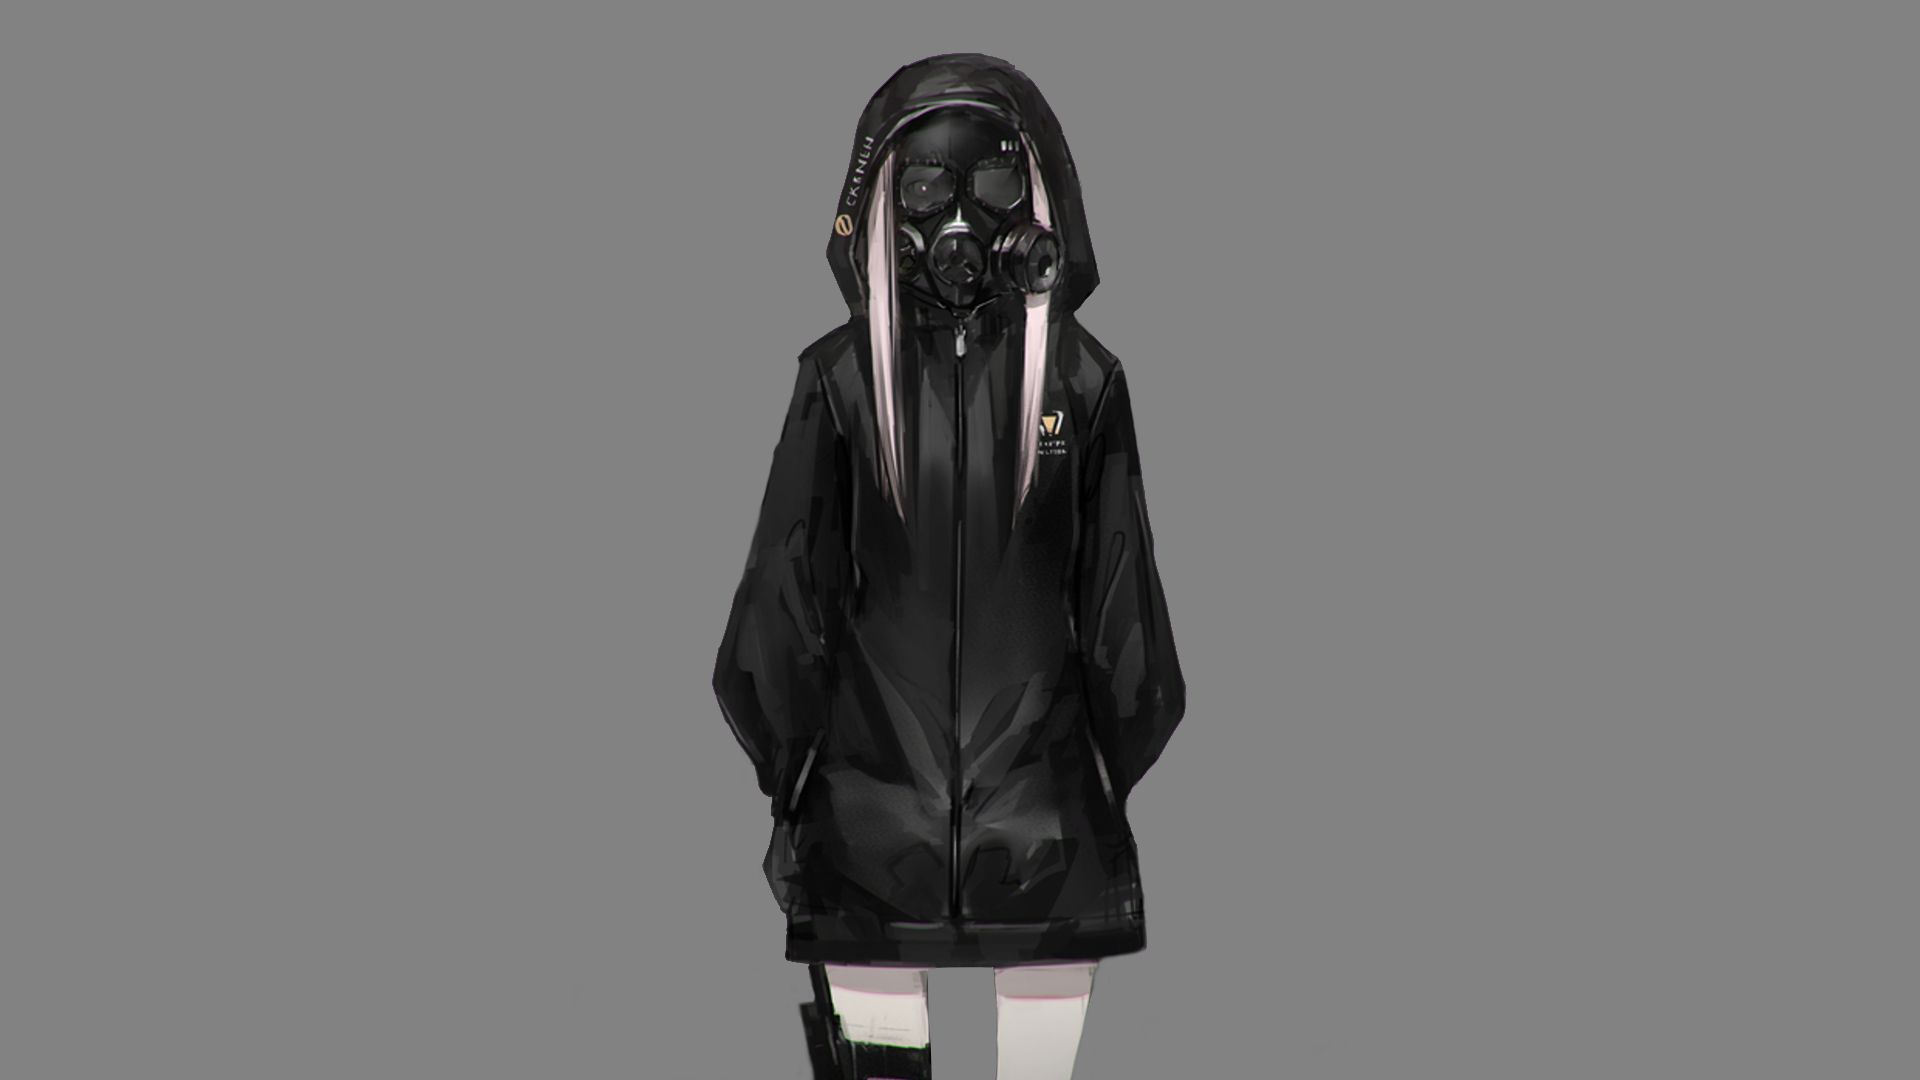 Gas Mask Render Anime by RinkuPanda on DeviantArt